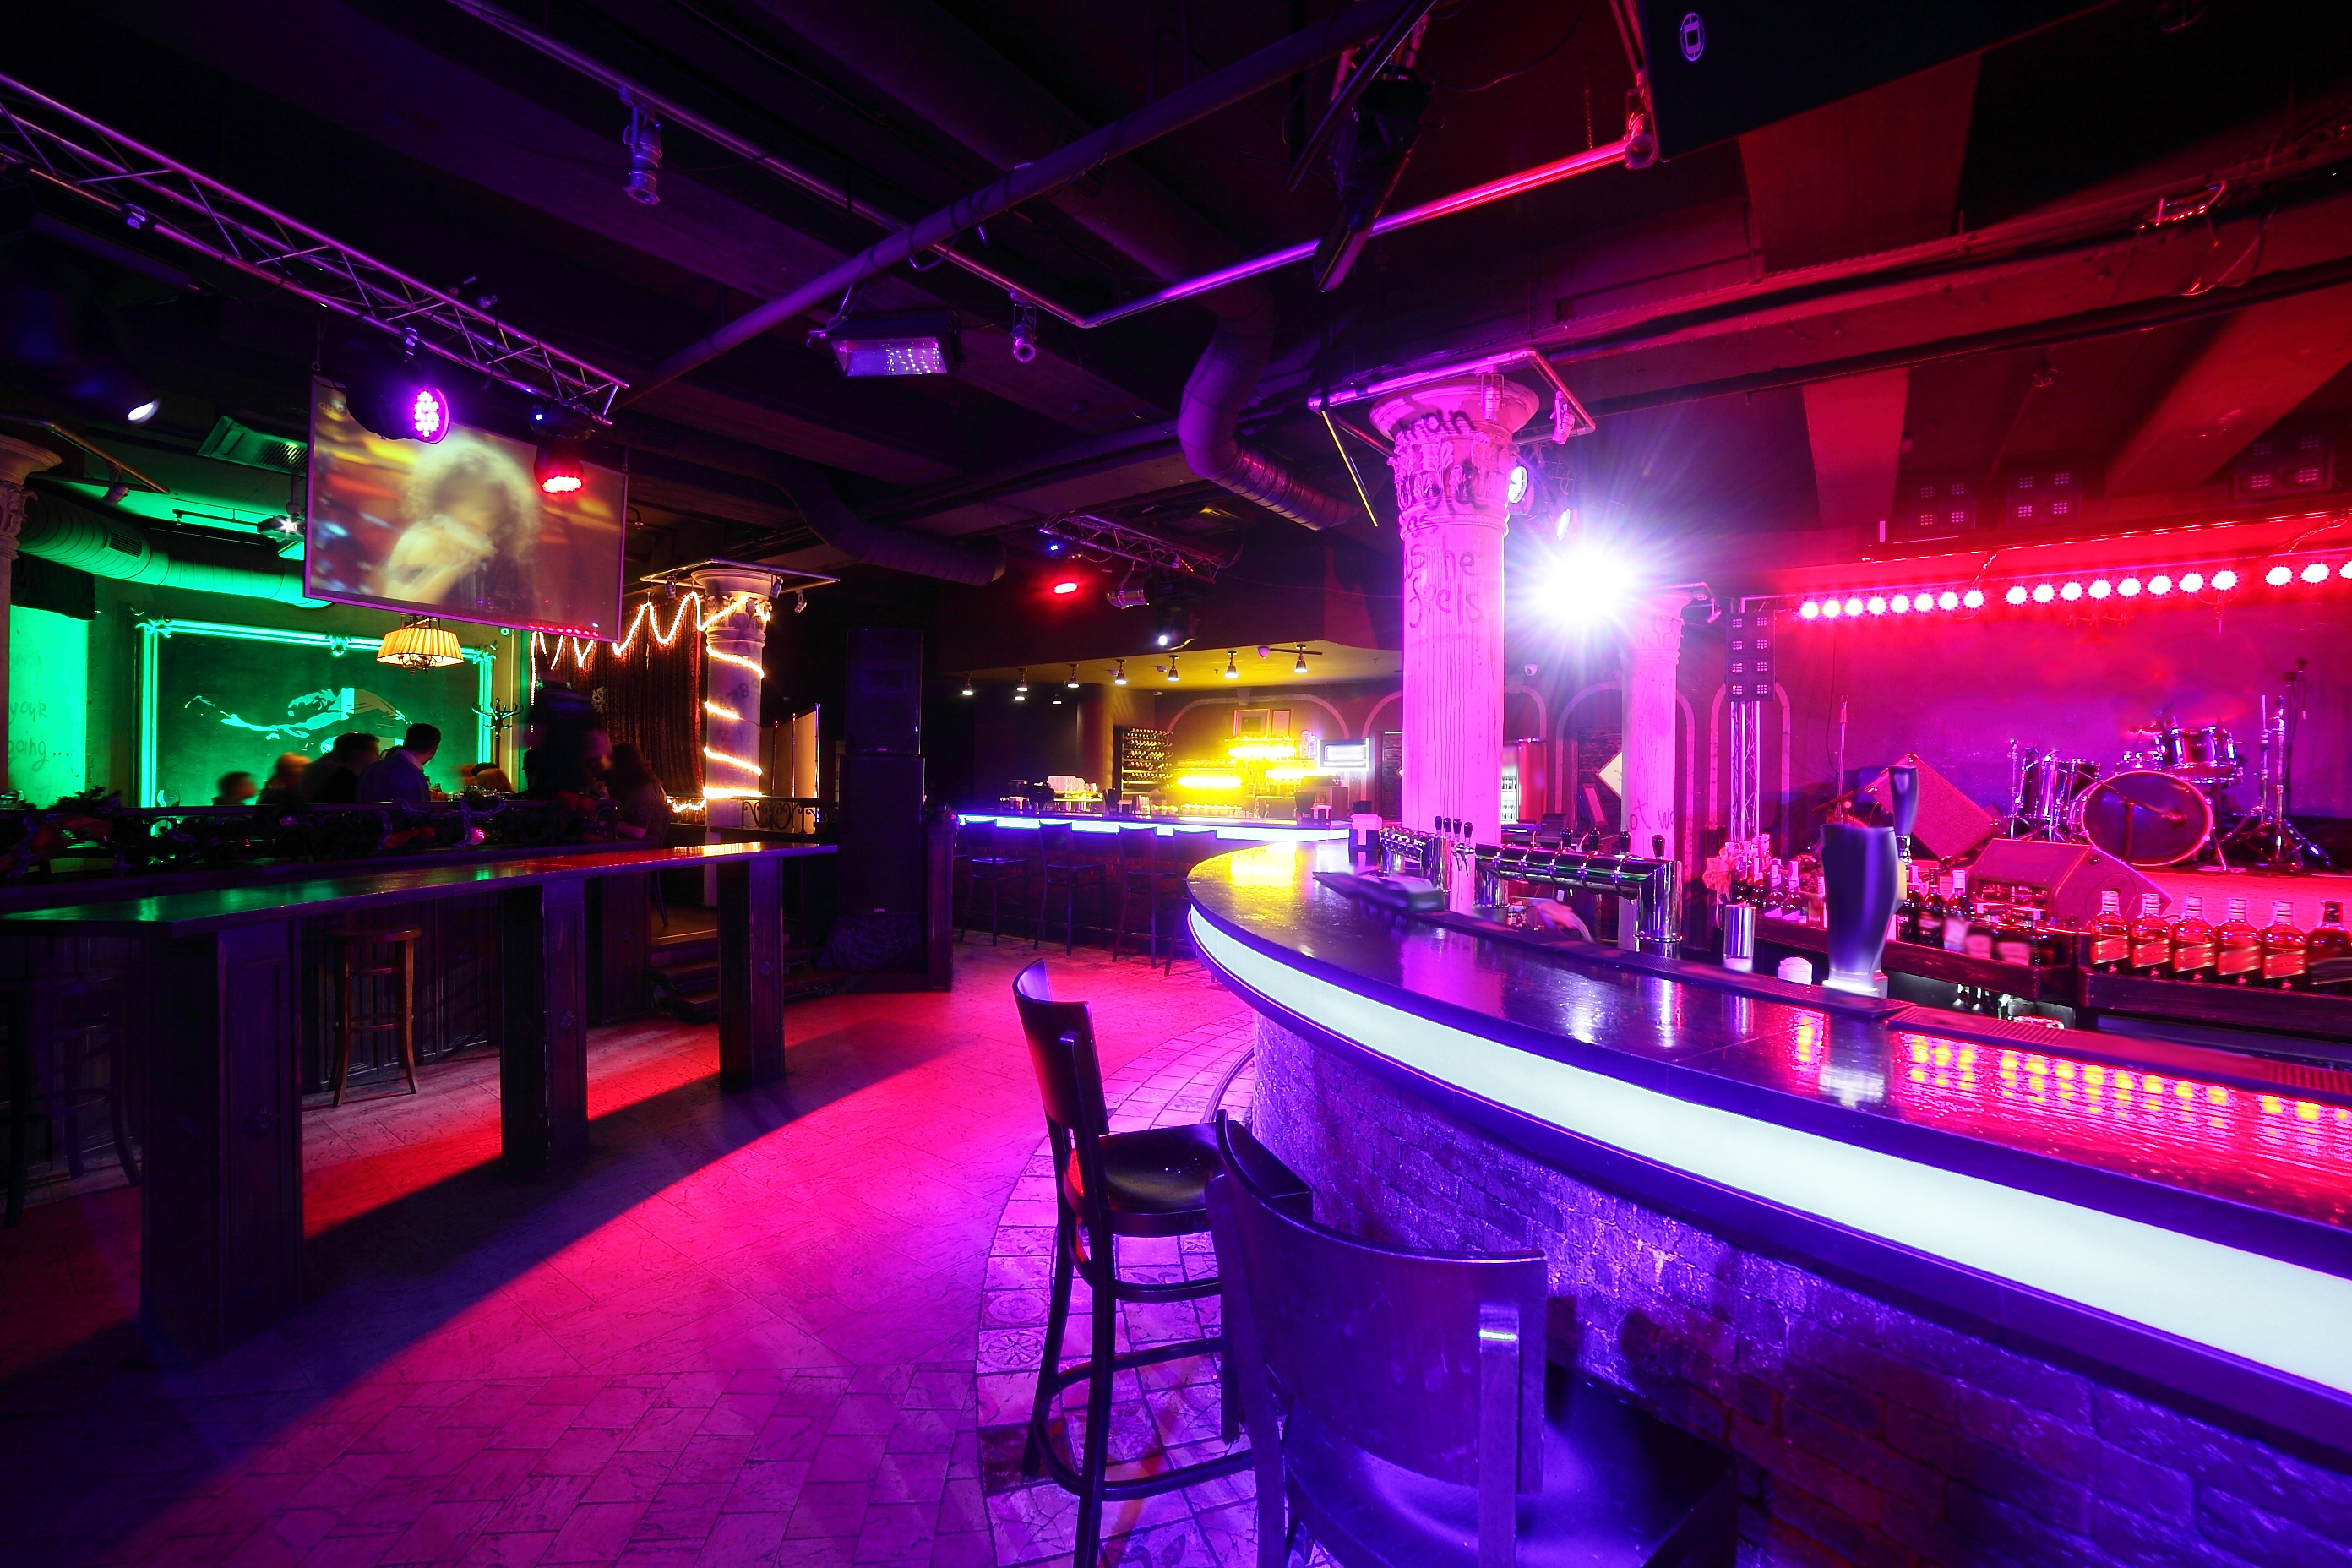 Night club | Source: Shutterstock